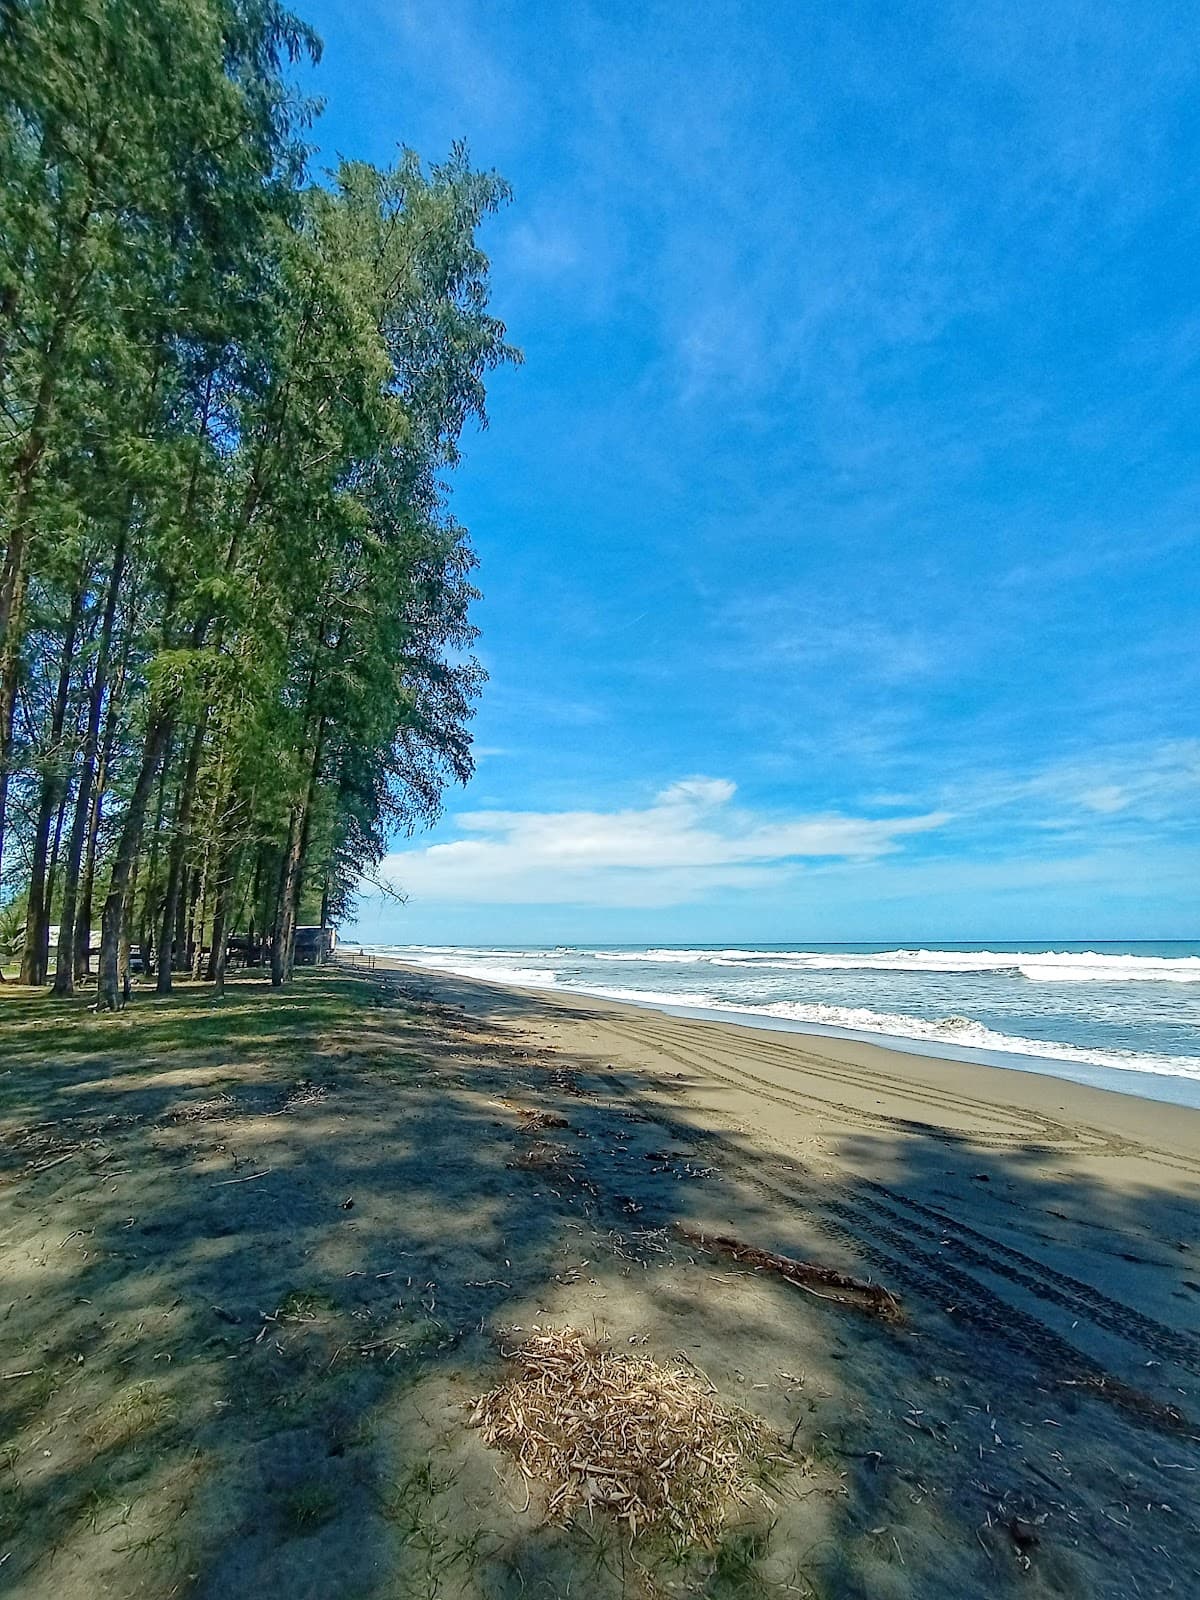 Sandee - Naga Permai Beach